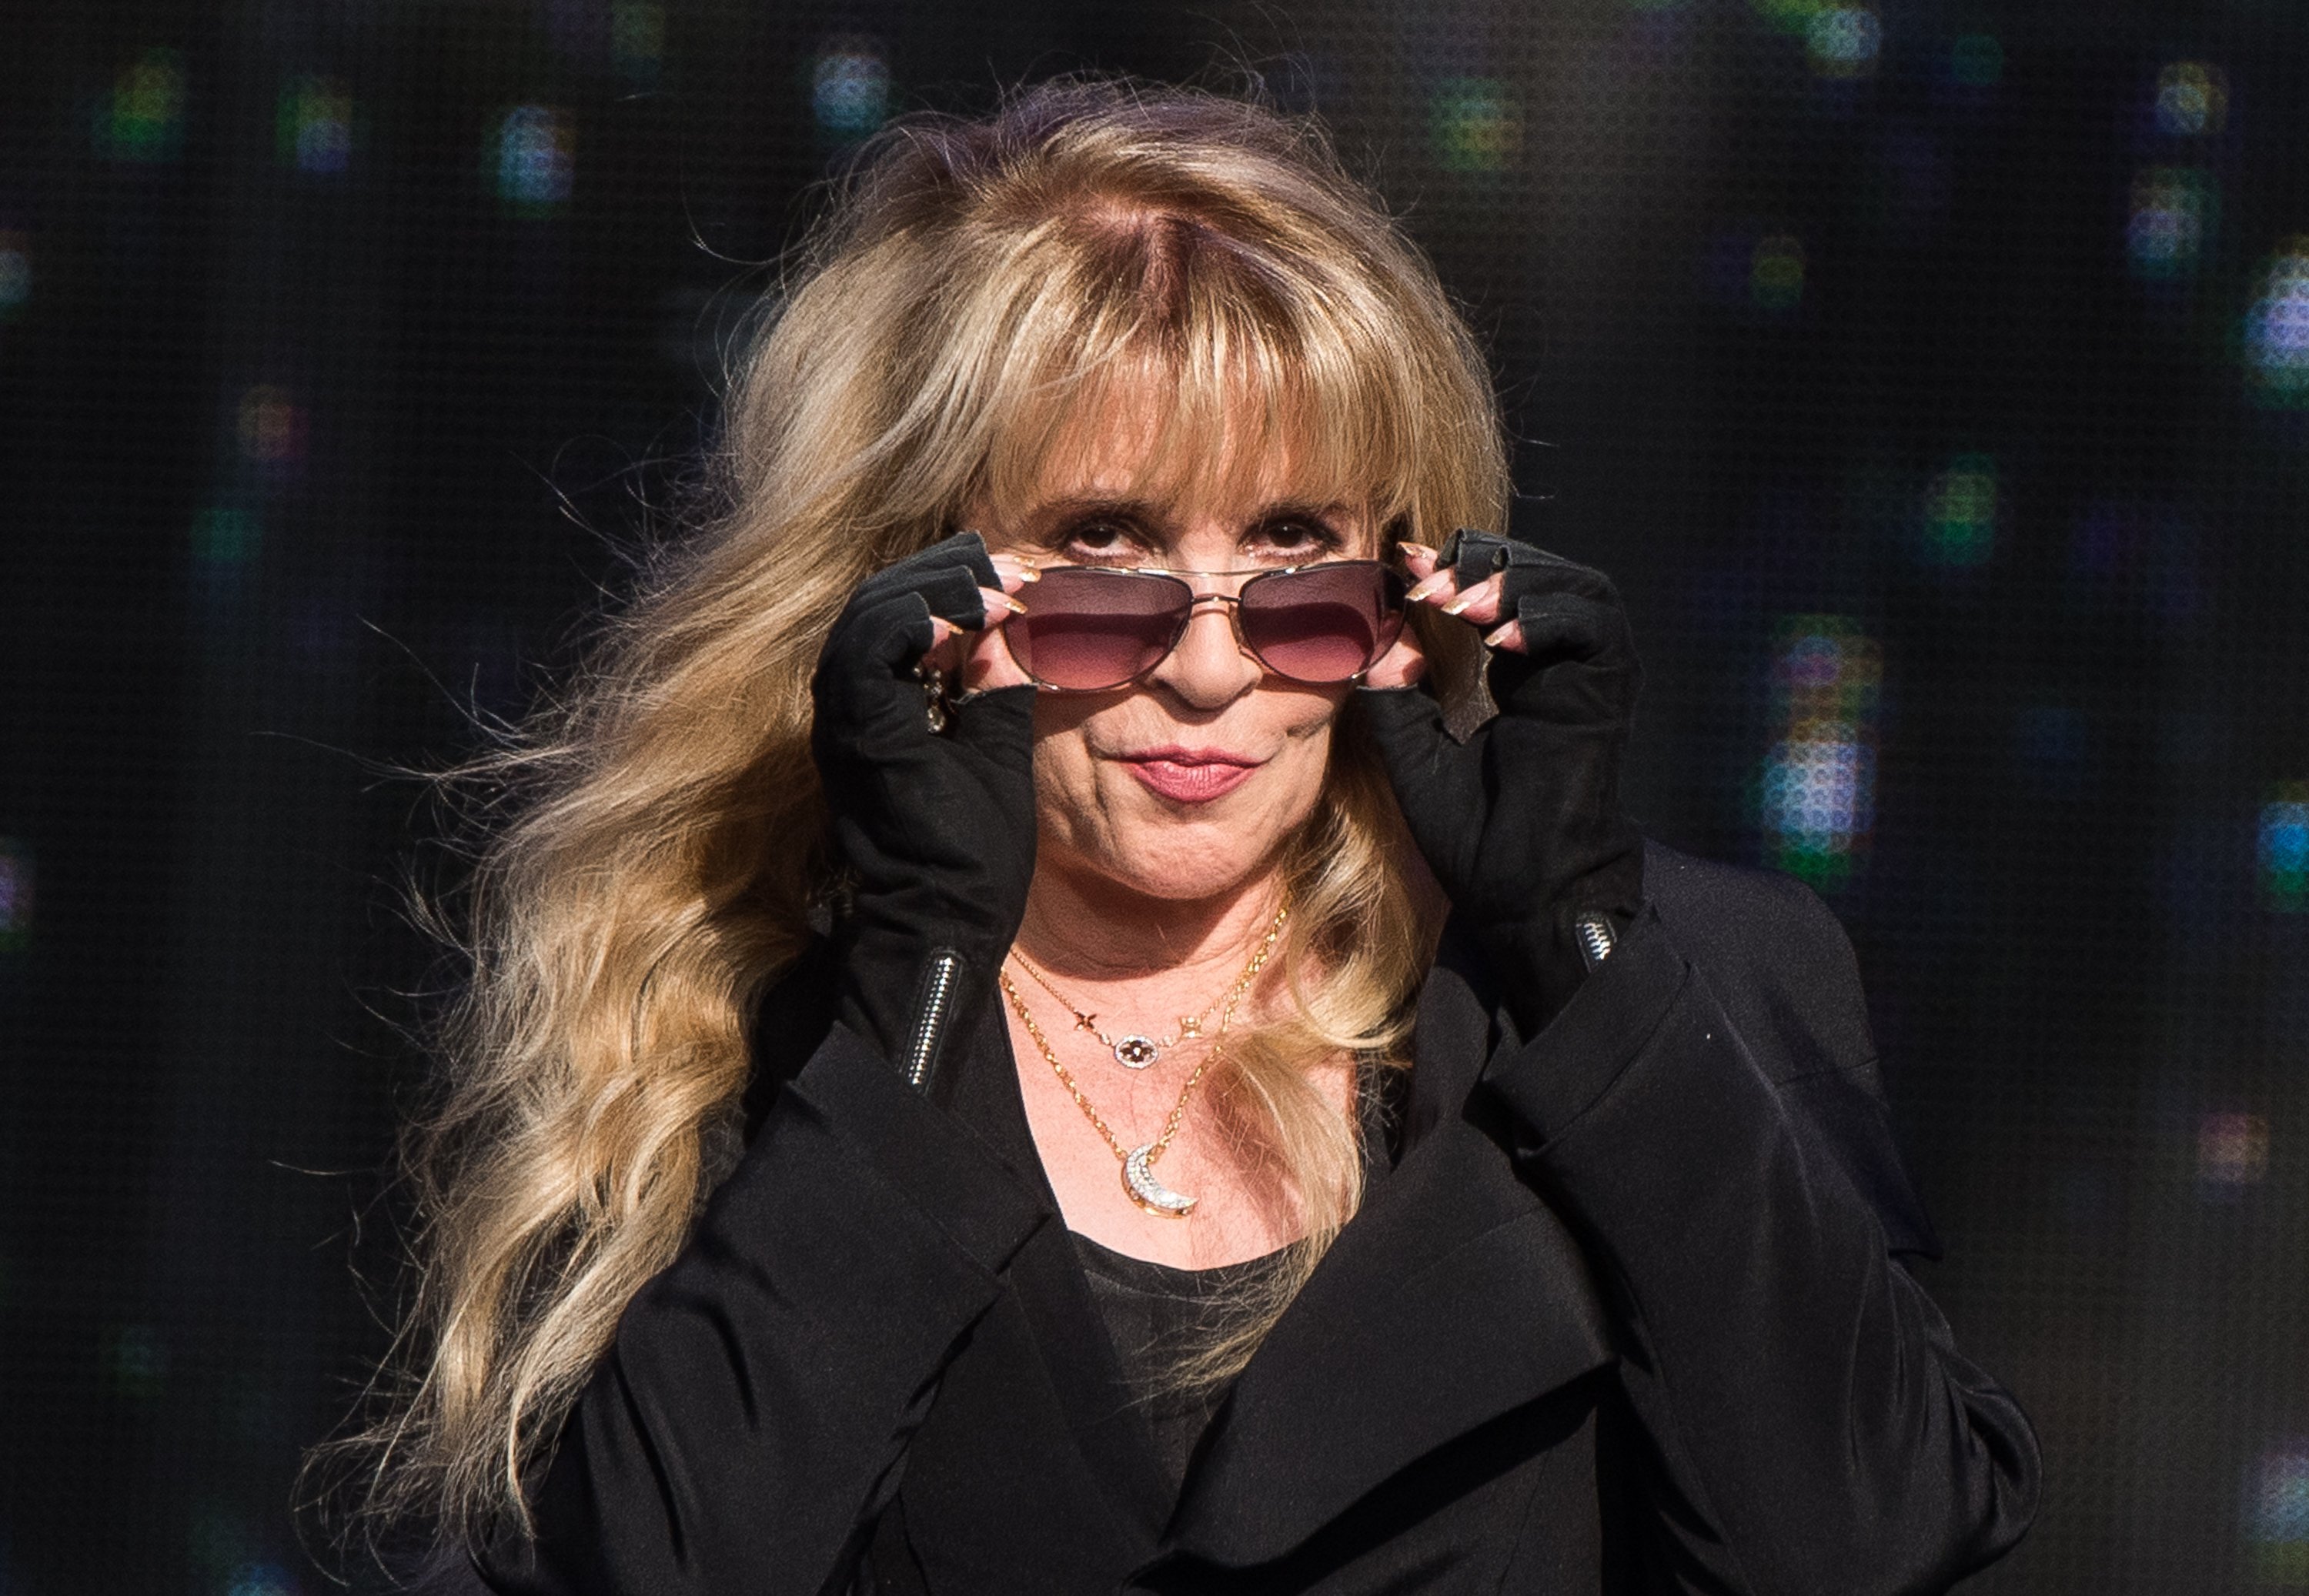 Stevie Nicks wears a black dress, black gloves, and sunglasses.